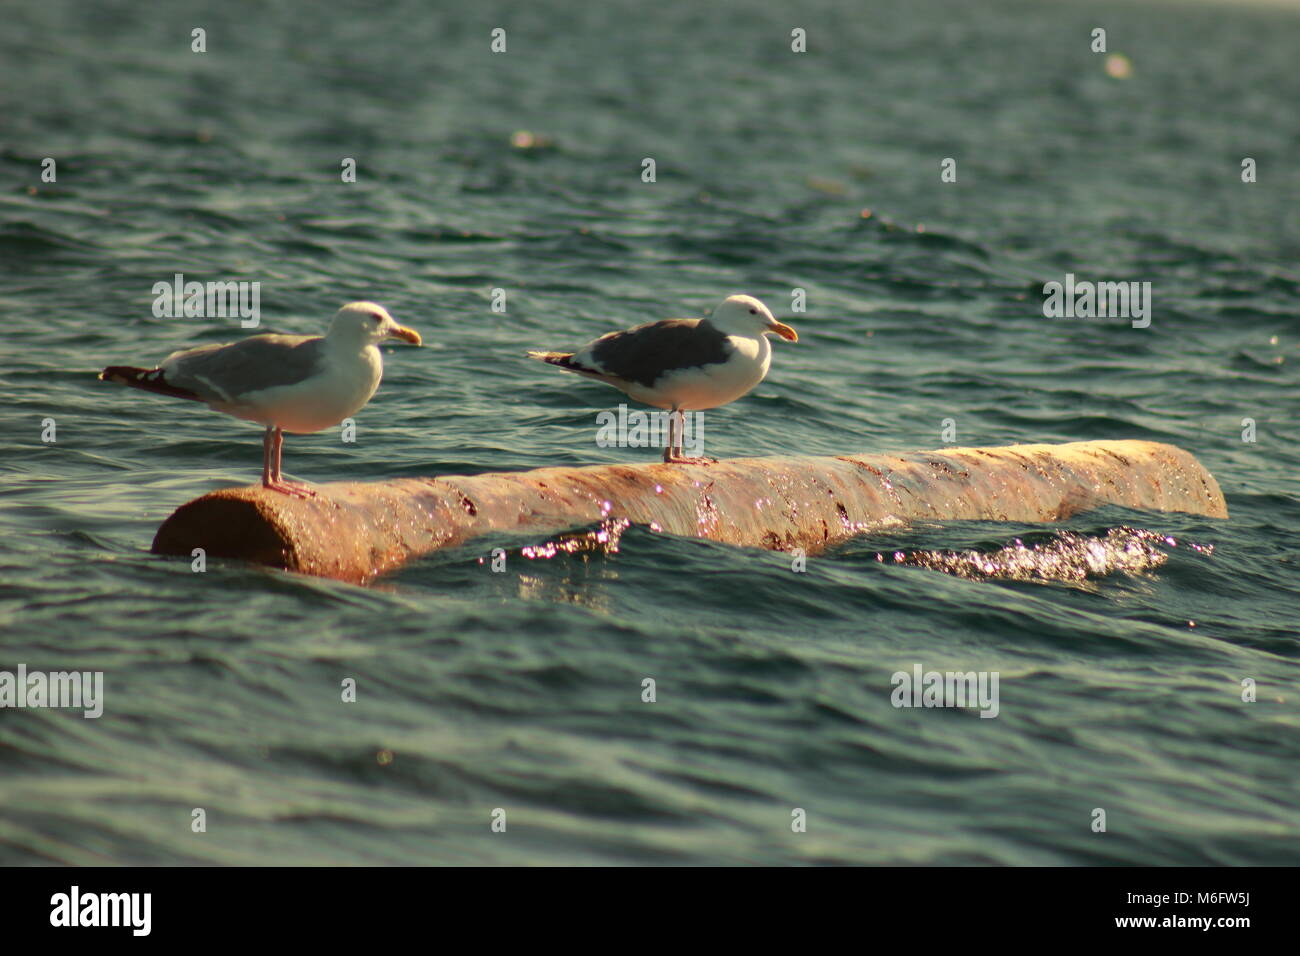 seagulls sitting on a floating bole Stock Photo